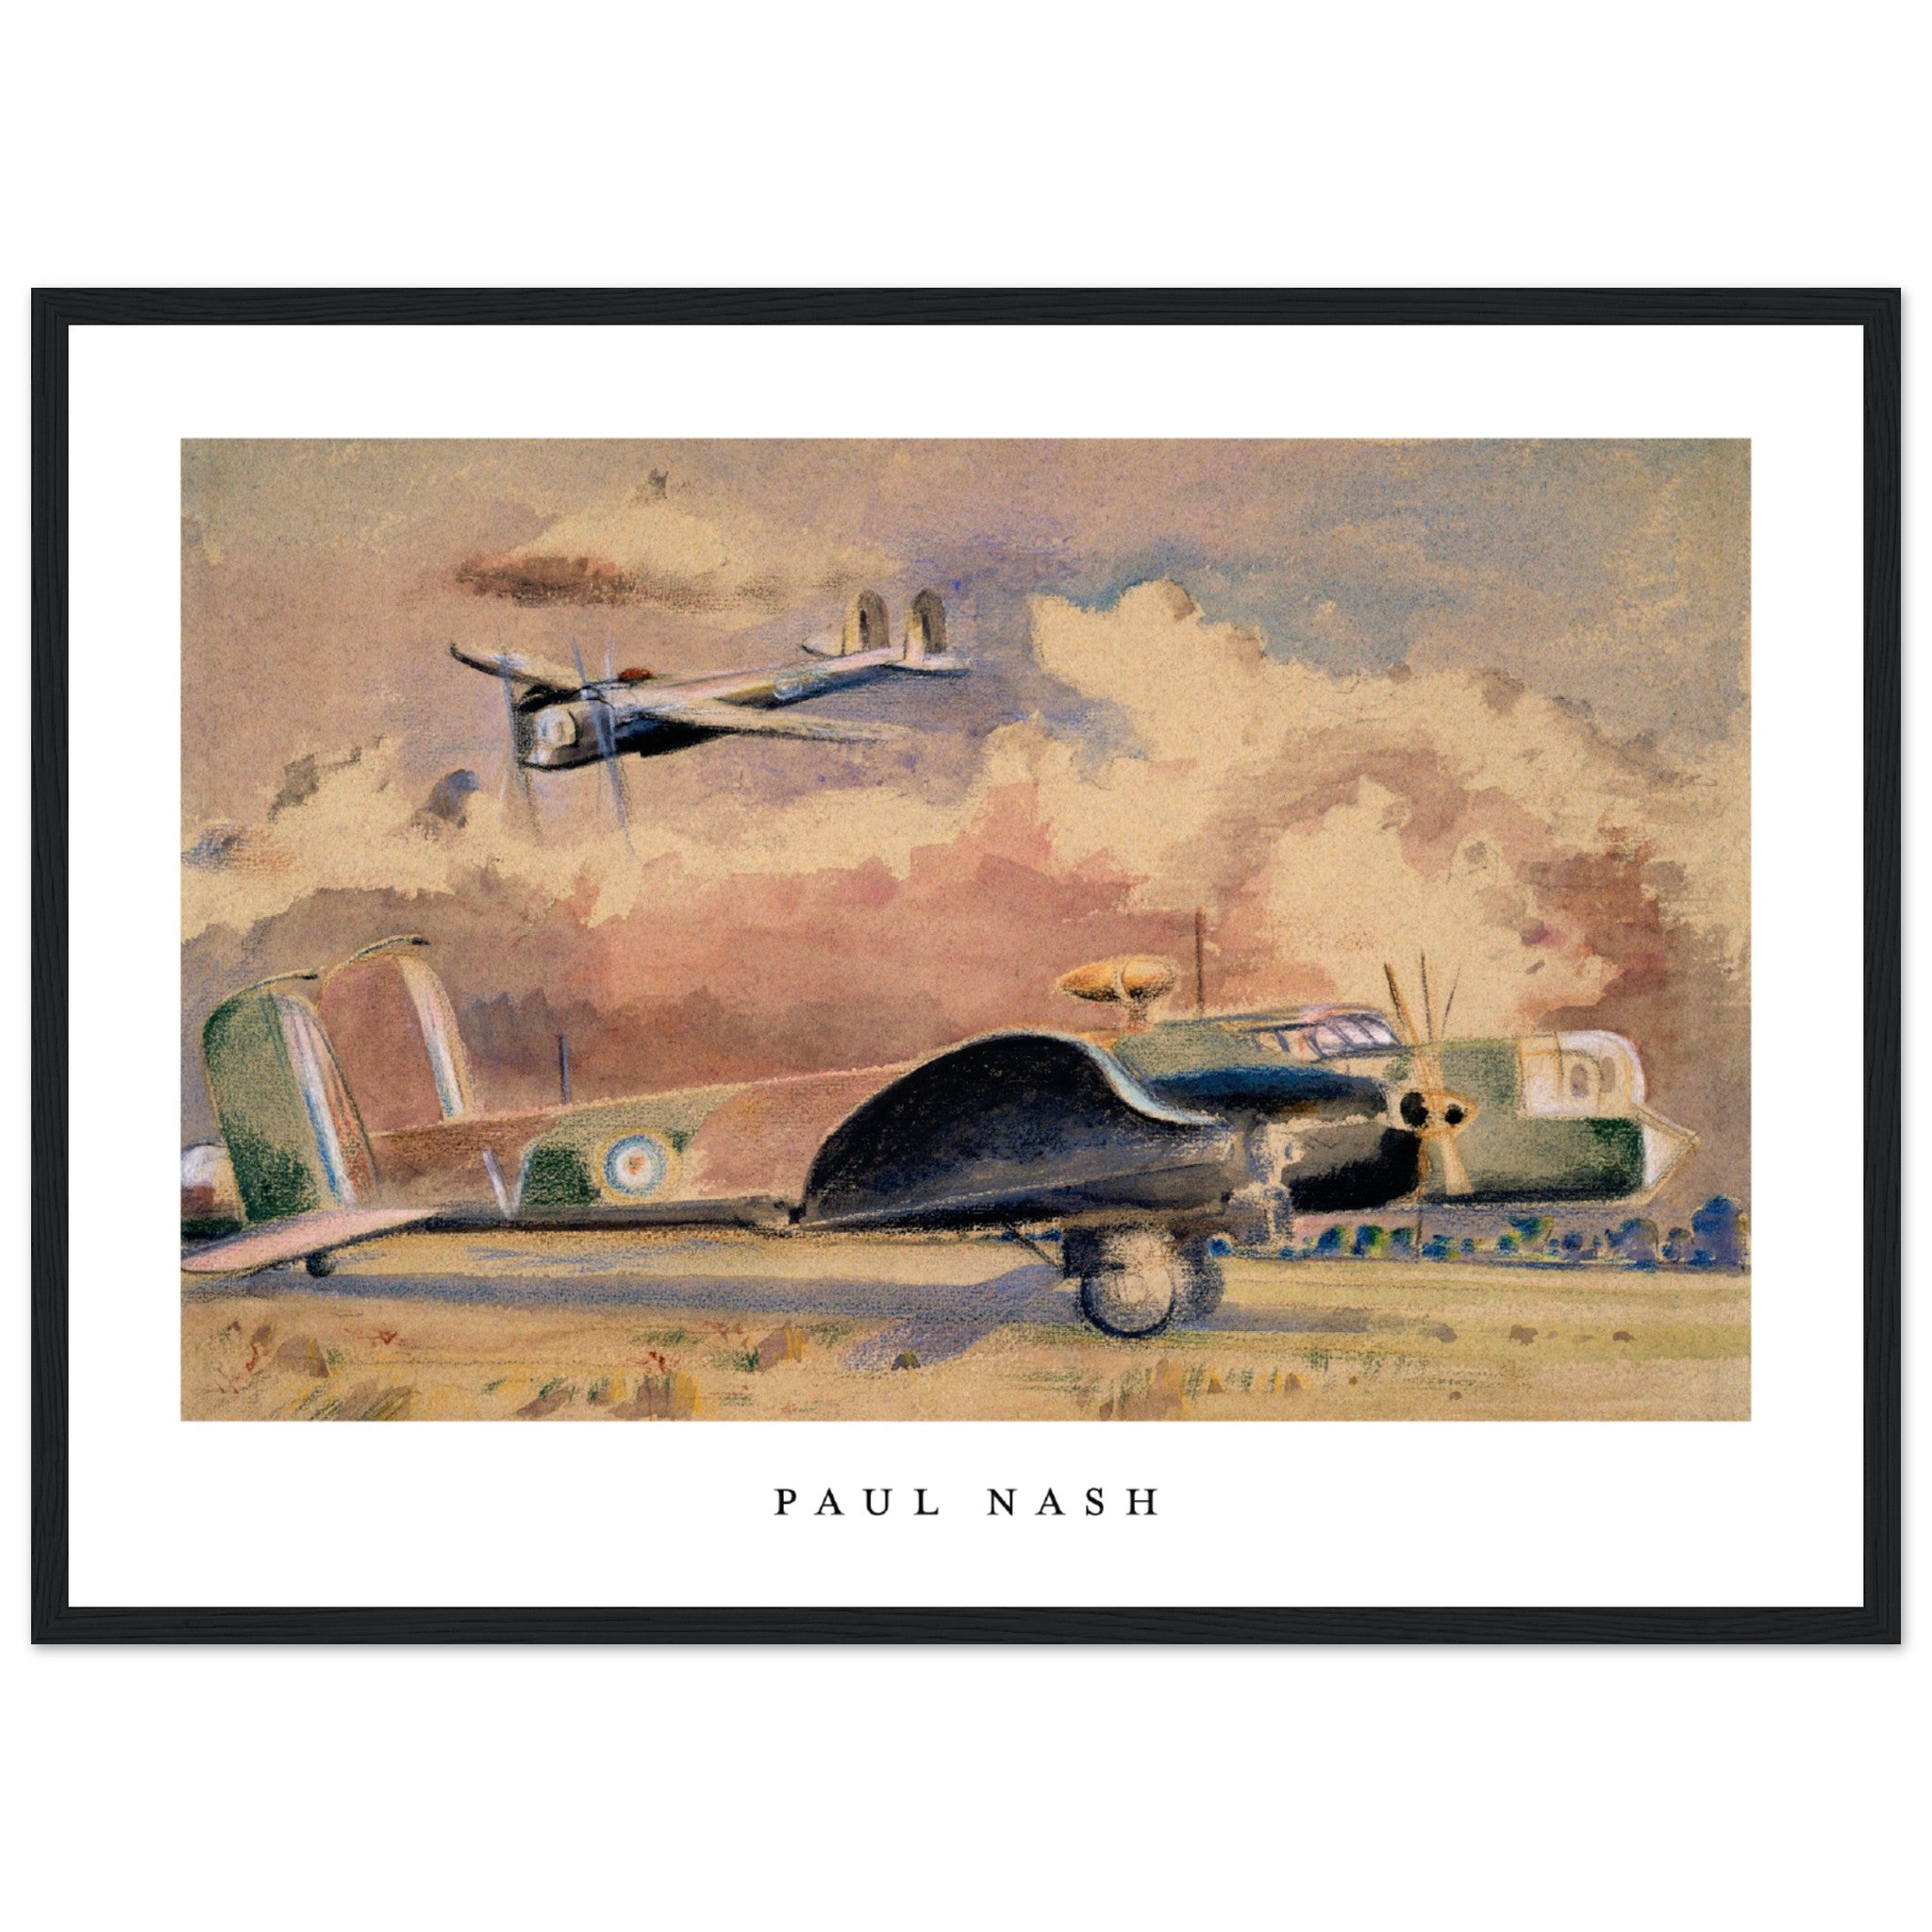 Paul Nash Plane Poster